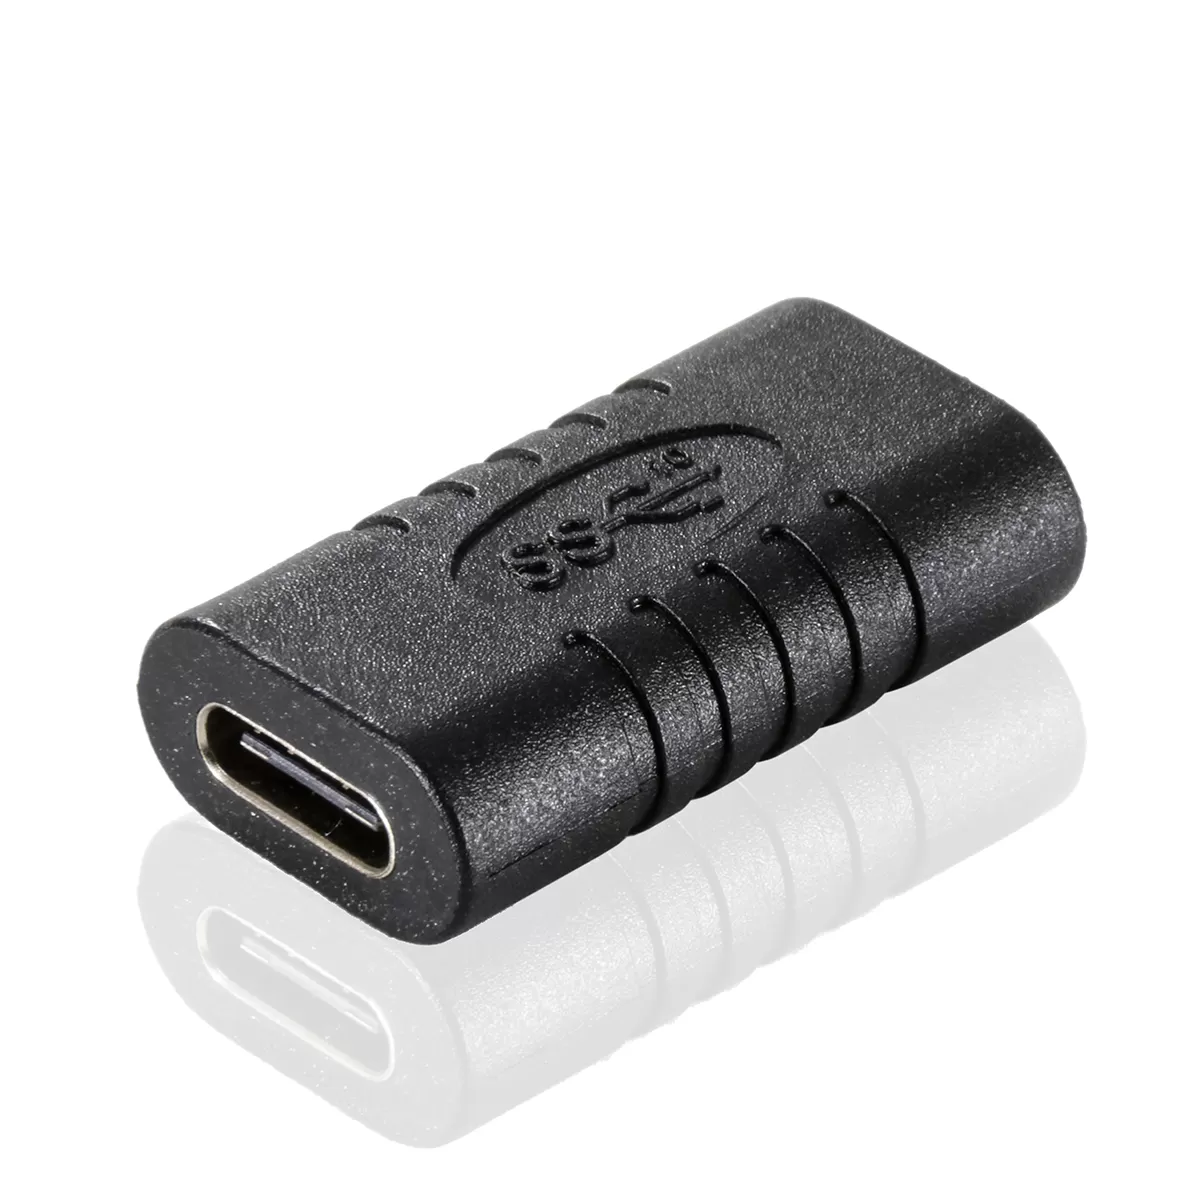 10G Gen 2 USB-C Female to Female Adapter